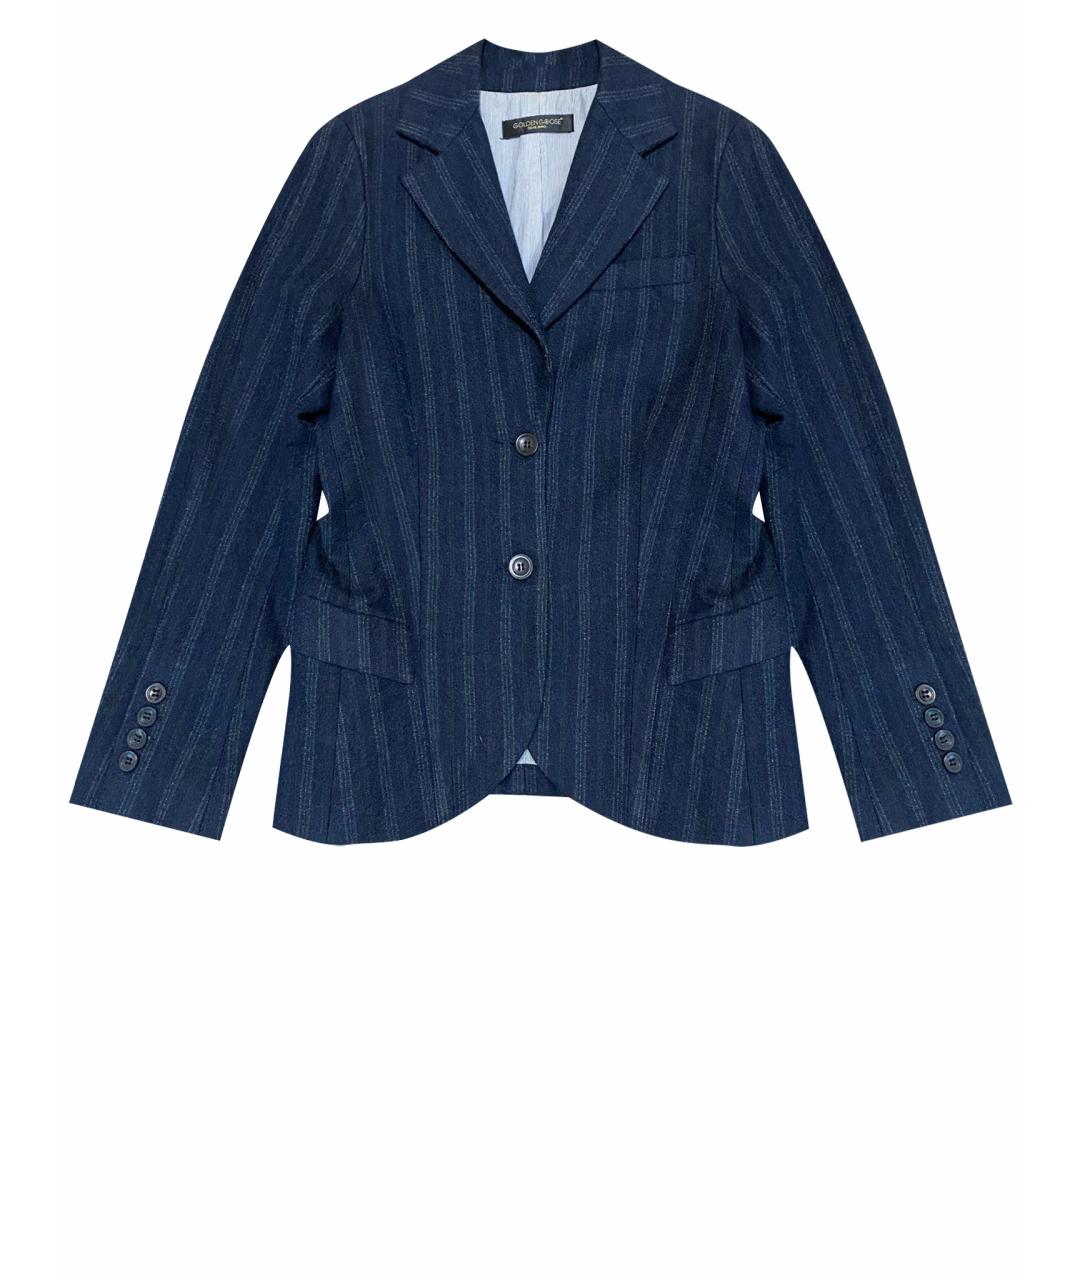 GOLDEN GOOSE DELUXE BRAND Темно-синий шерстяной жакет/пиджак, фото 1